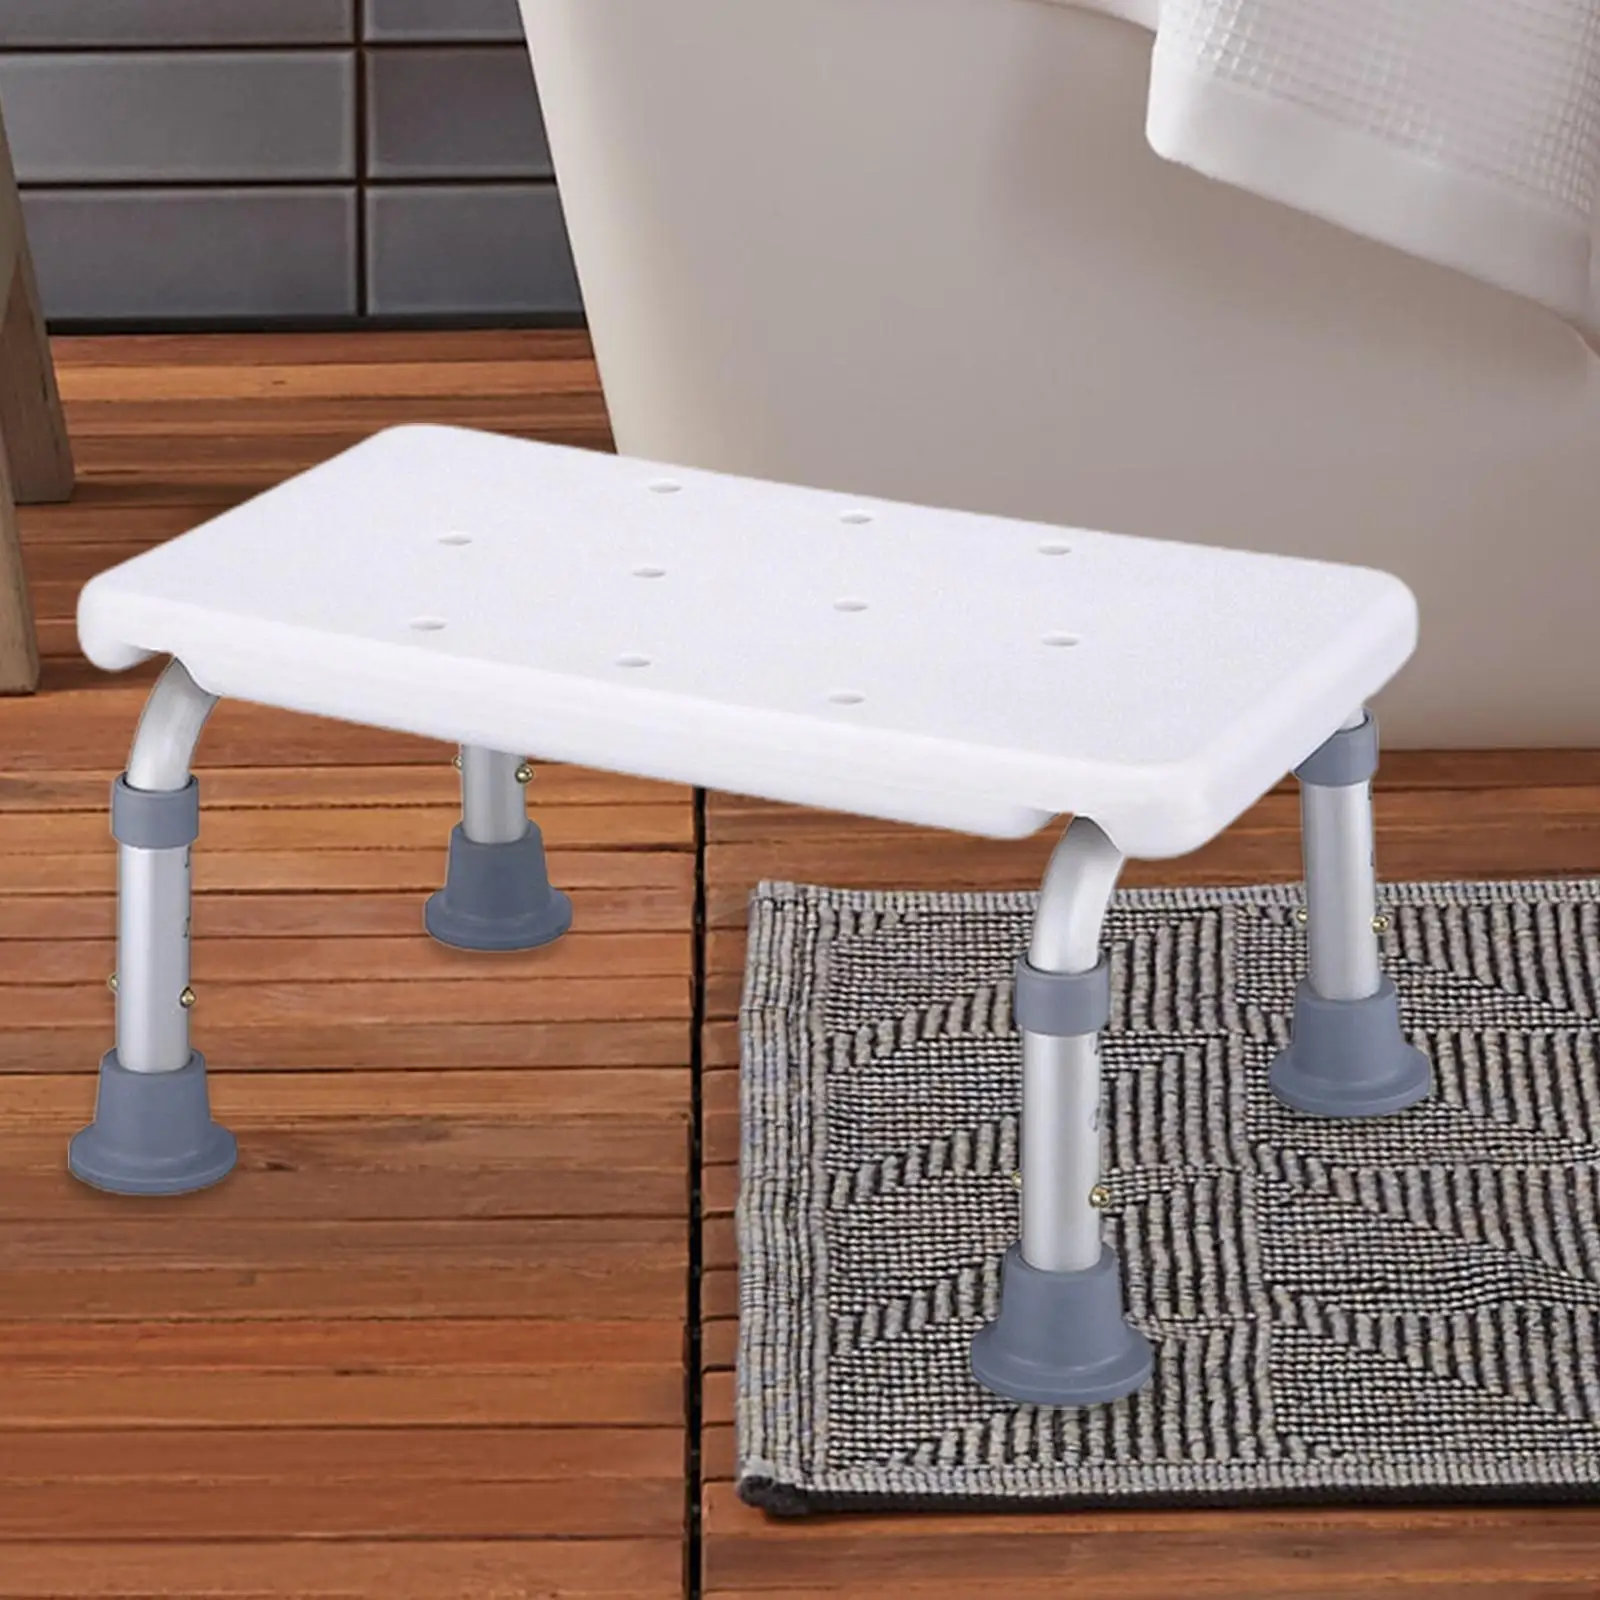 Shower Stool Bathtub Stool Adjustable Lightweight with Aluminum Legs Bath Stool for Shower Bathroom Step Stool for Seniors Kids